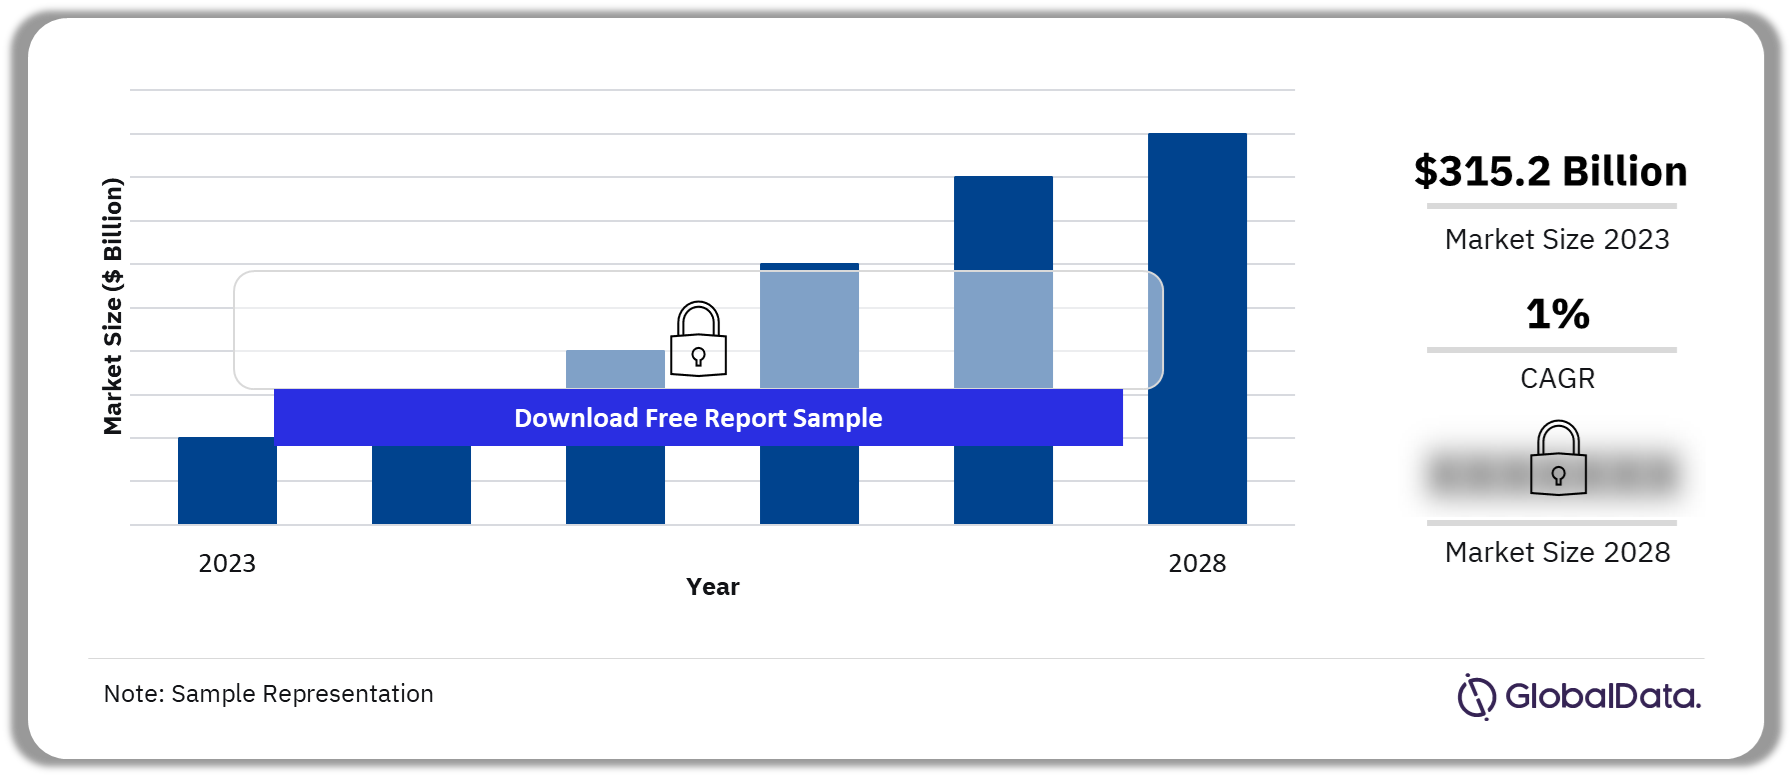 APAC Fixed Broadband Market Outlook 2023-2028 ($ Billion)